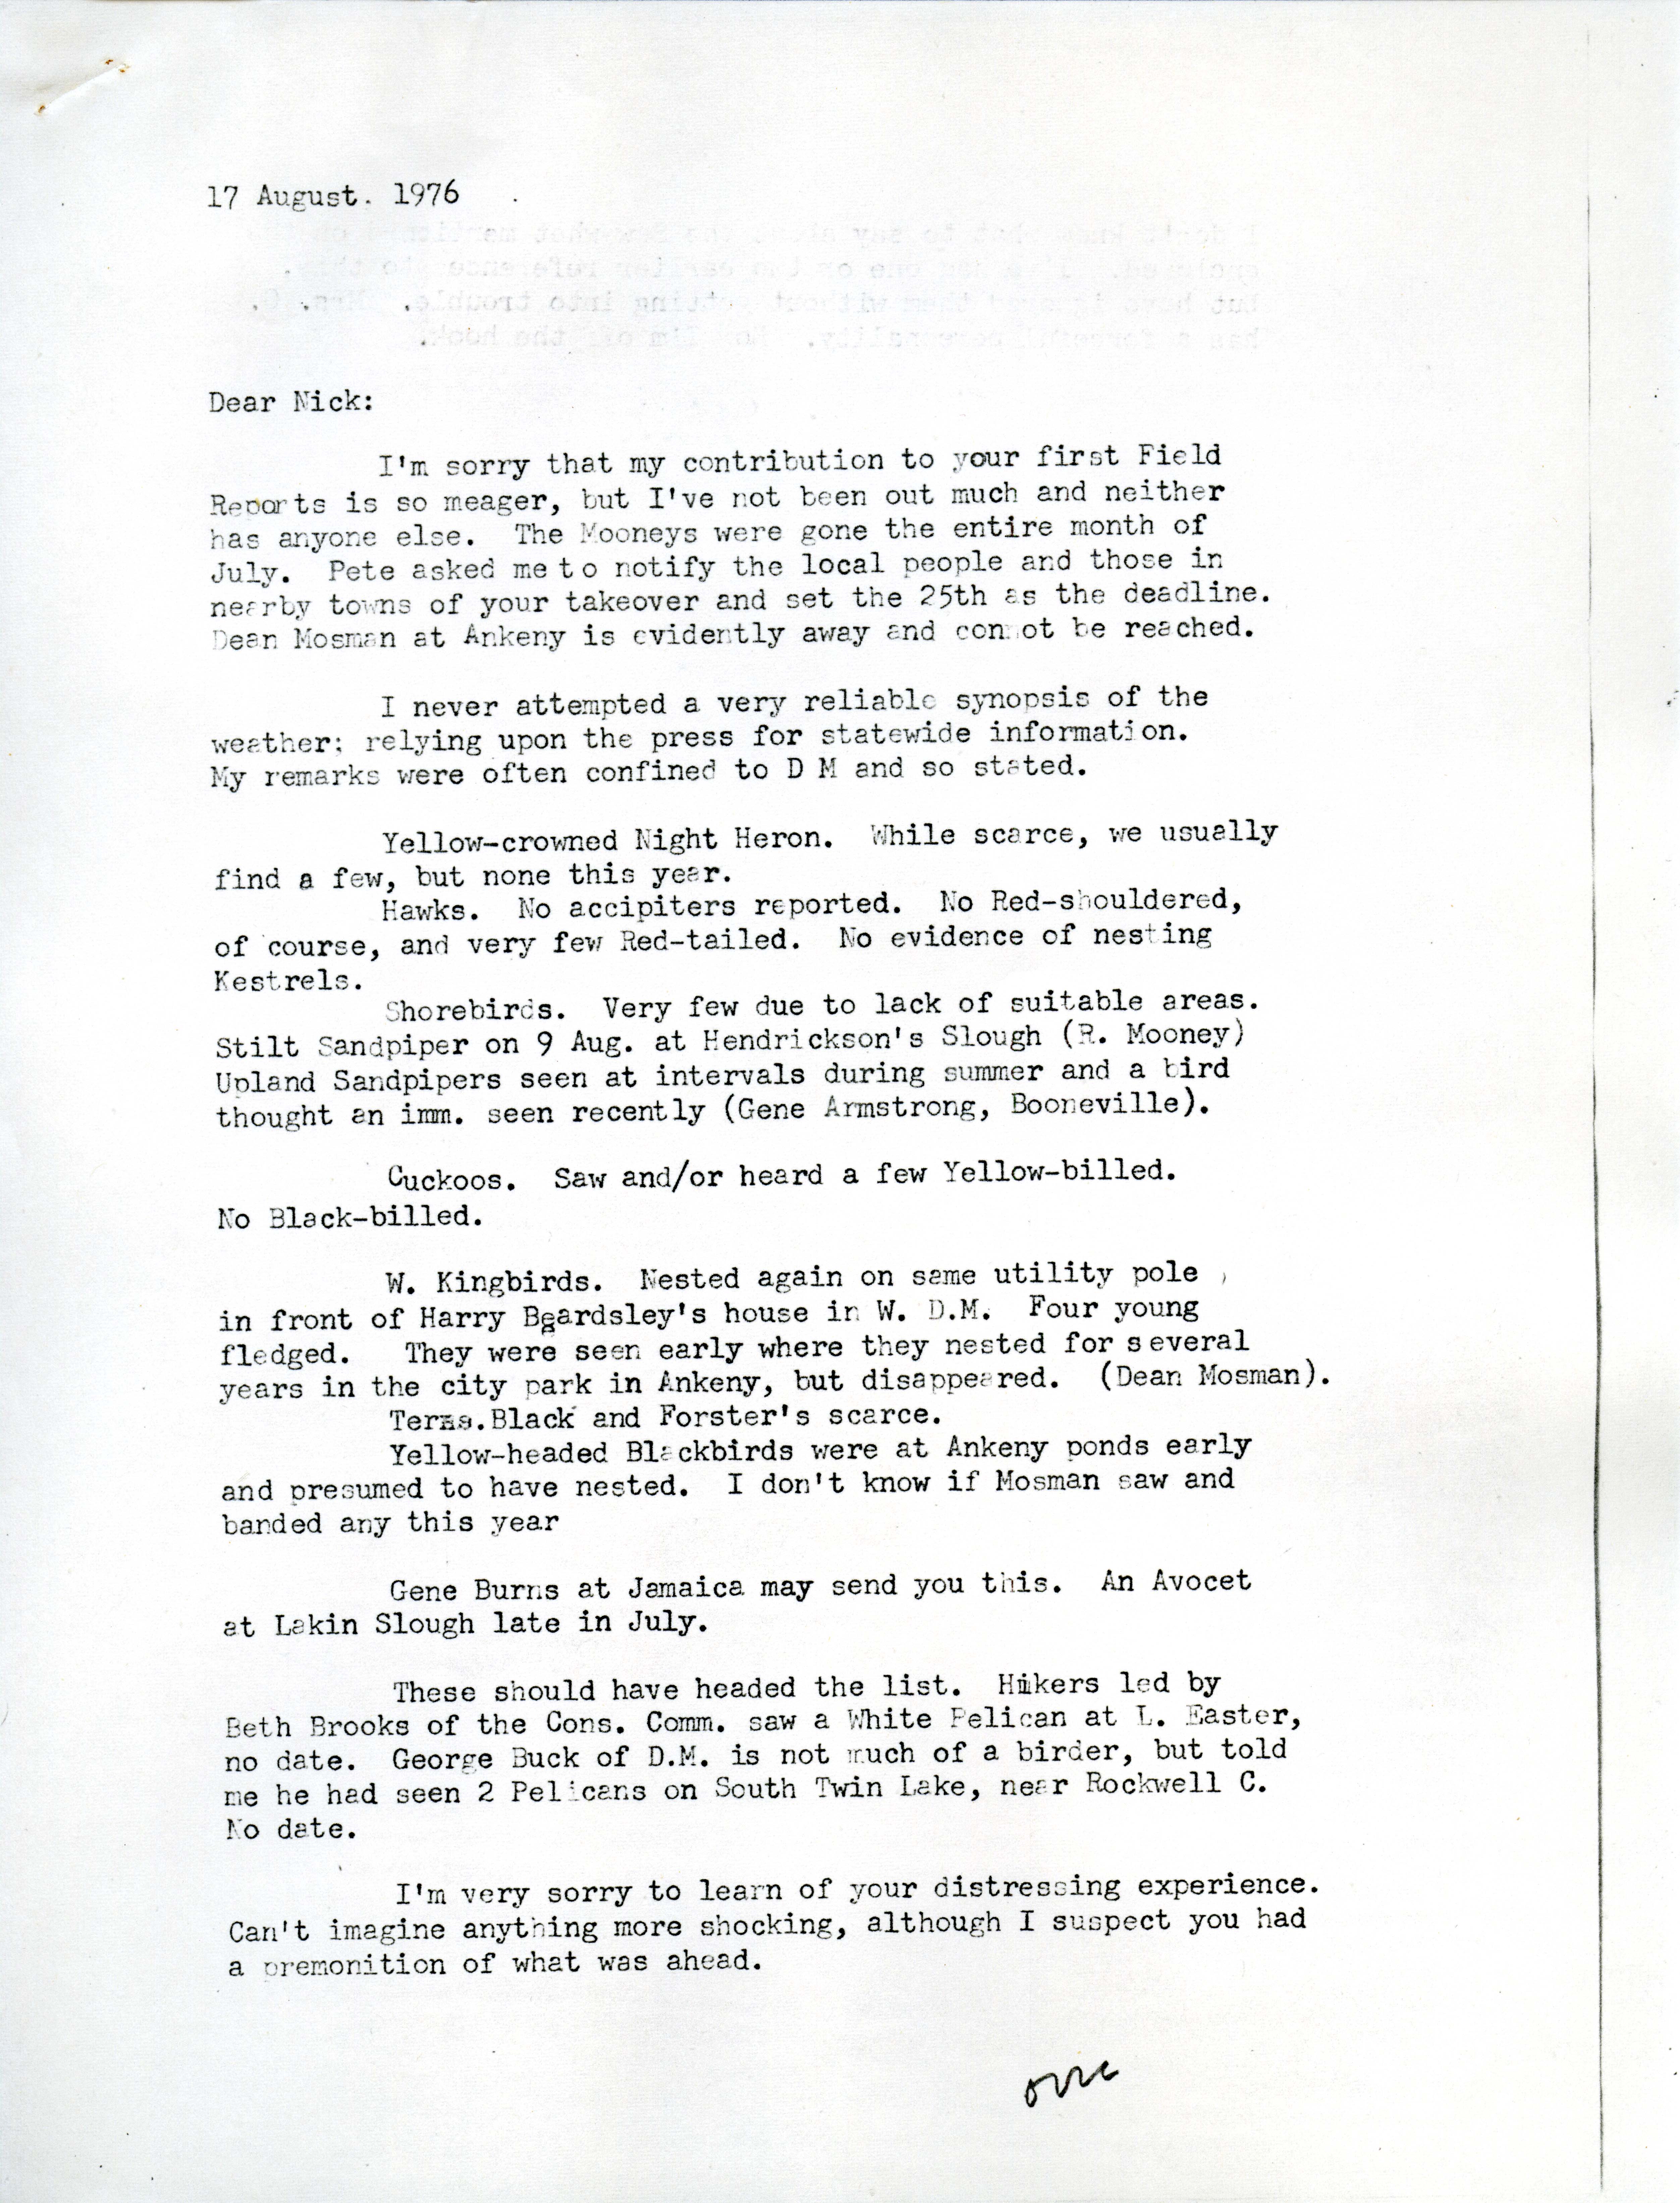 Letter from Woodward Brown to Nicholas Halmi regarding bird sightings, August 17, 1976